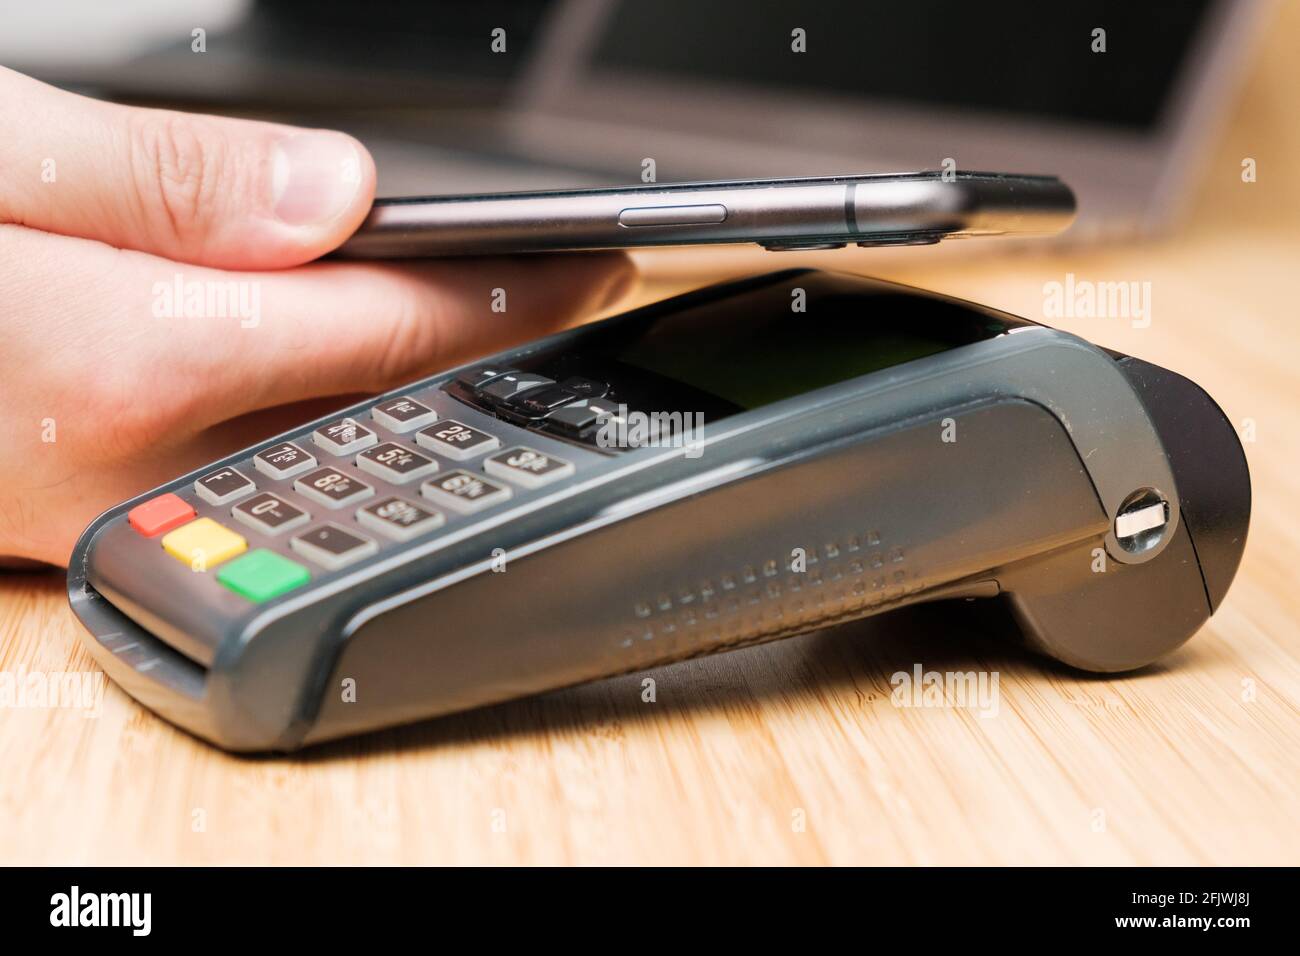 Man nutzt kabelloses Terminal, kontaktloses Bezahlen mit dem Smartphone Stockfoto